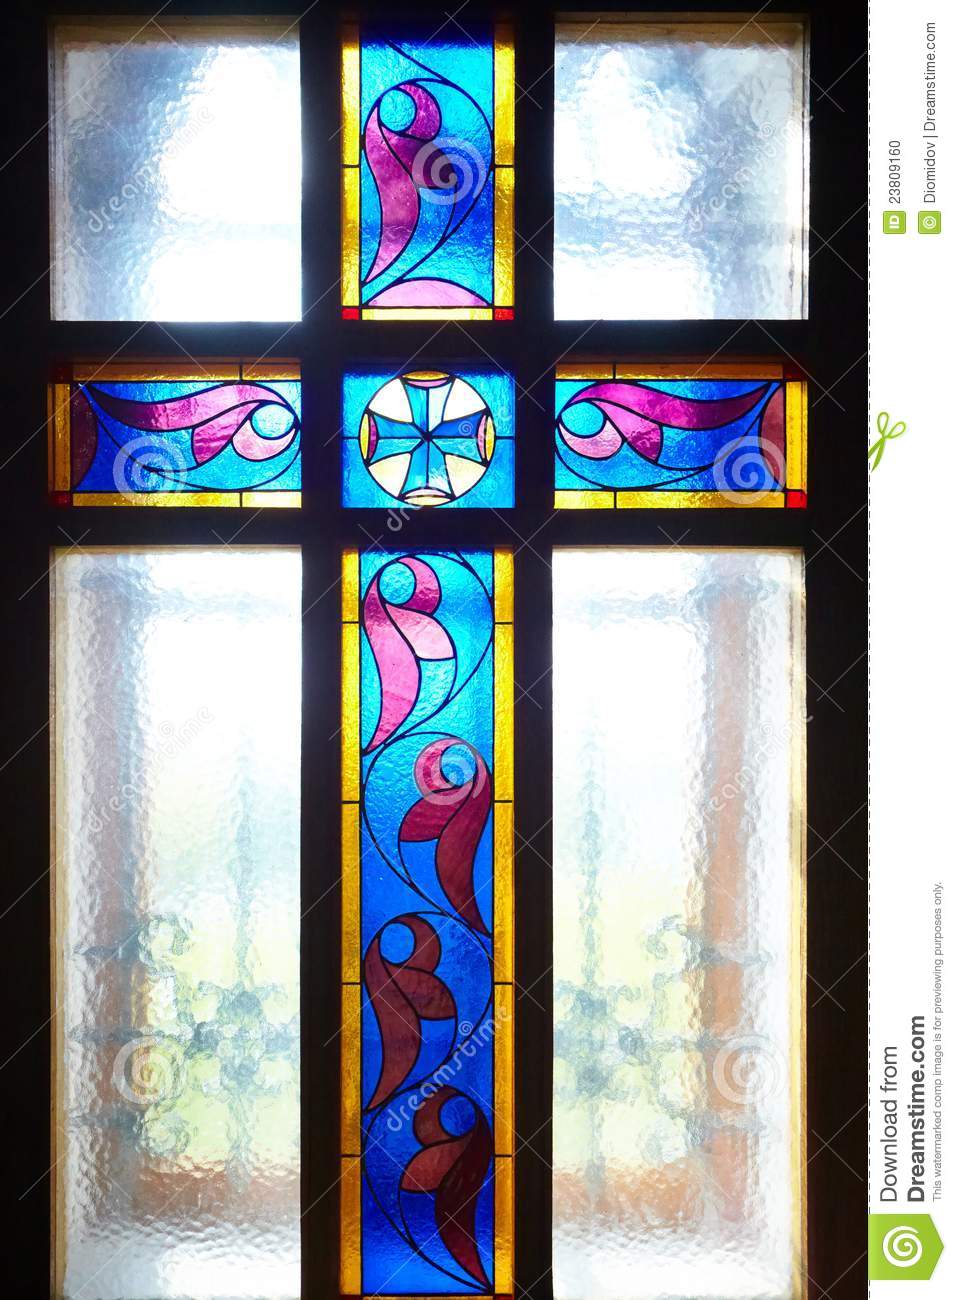 Catholic Cross On The Window  Stained Glass  Stock Photo   Image